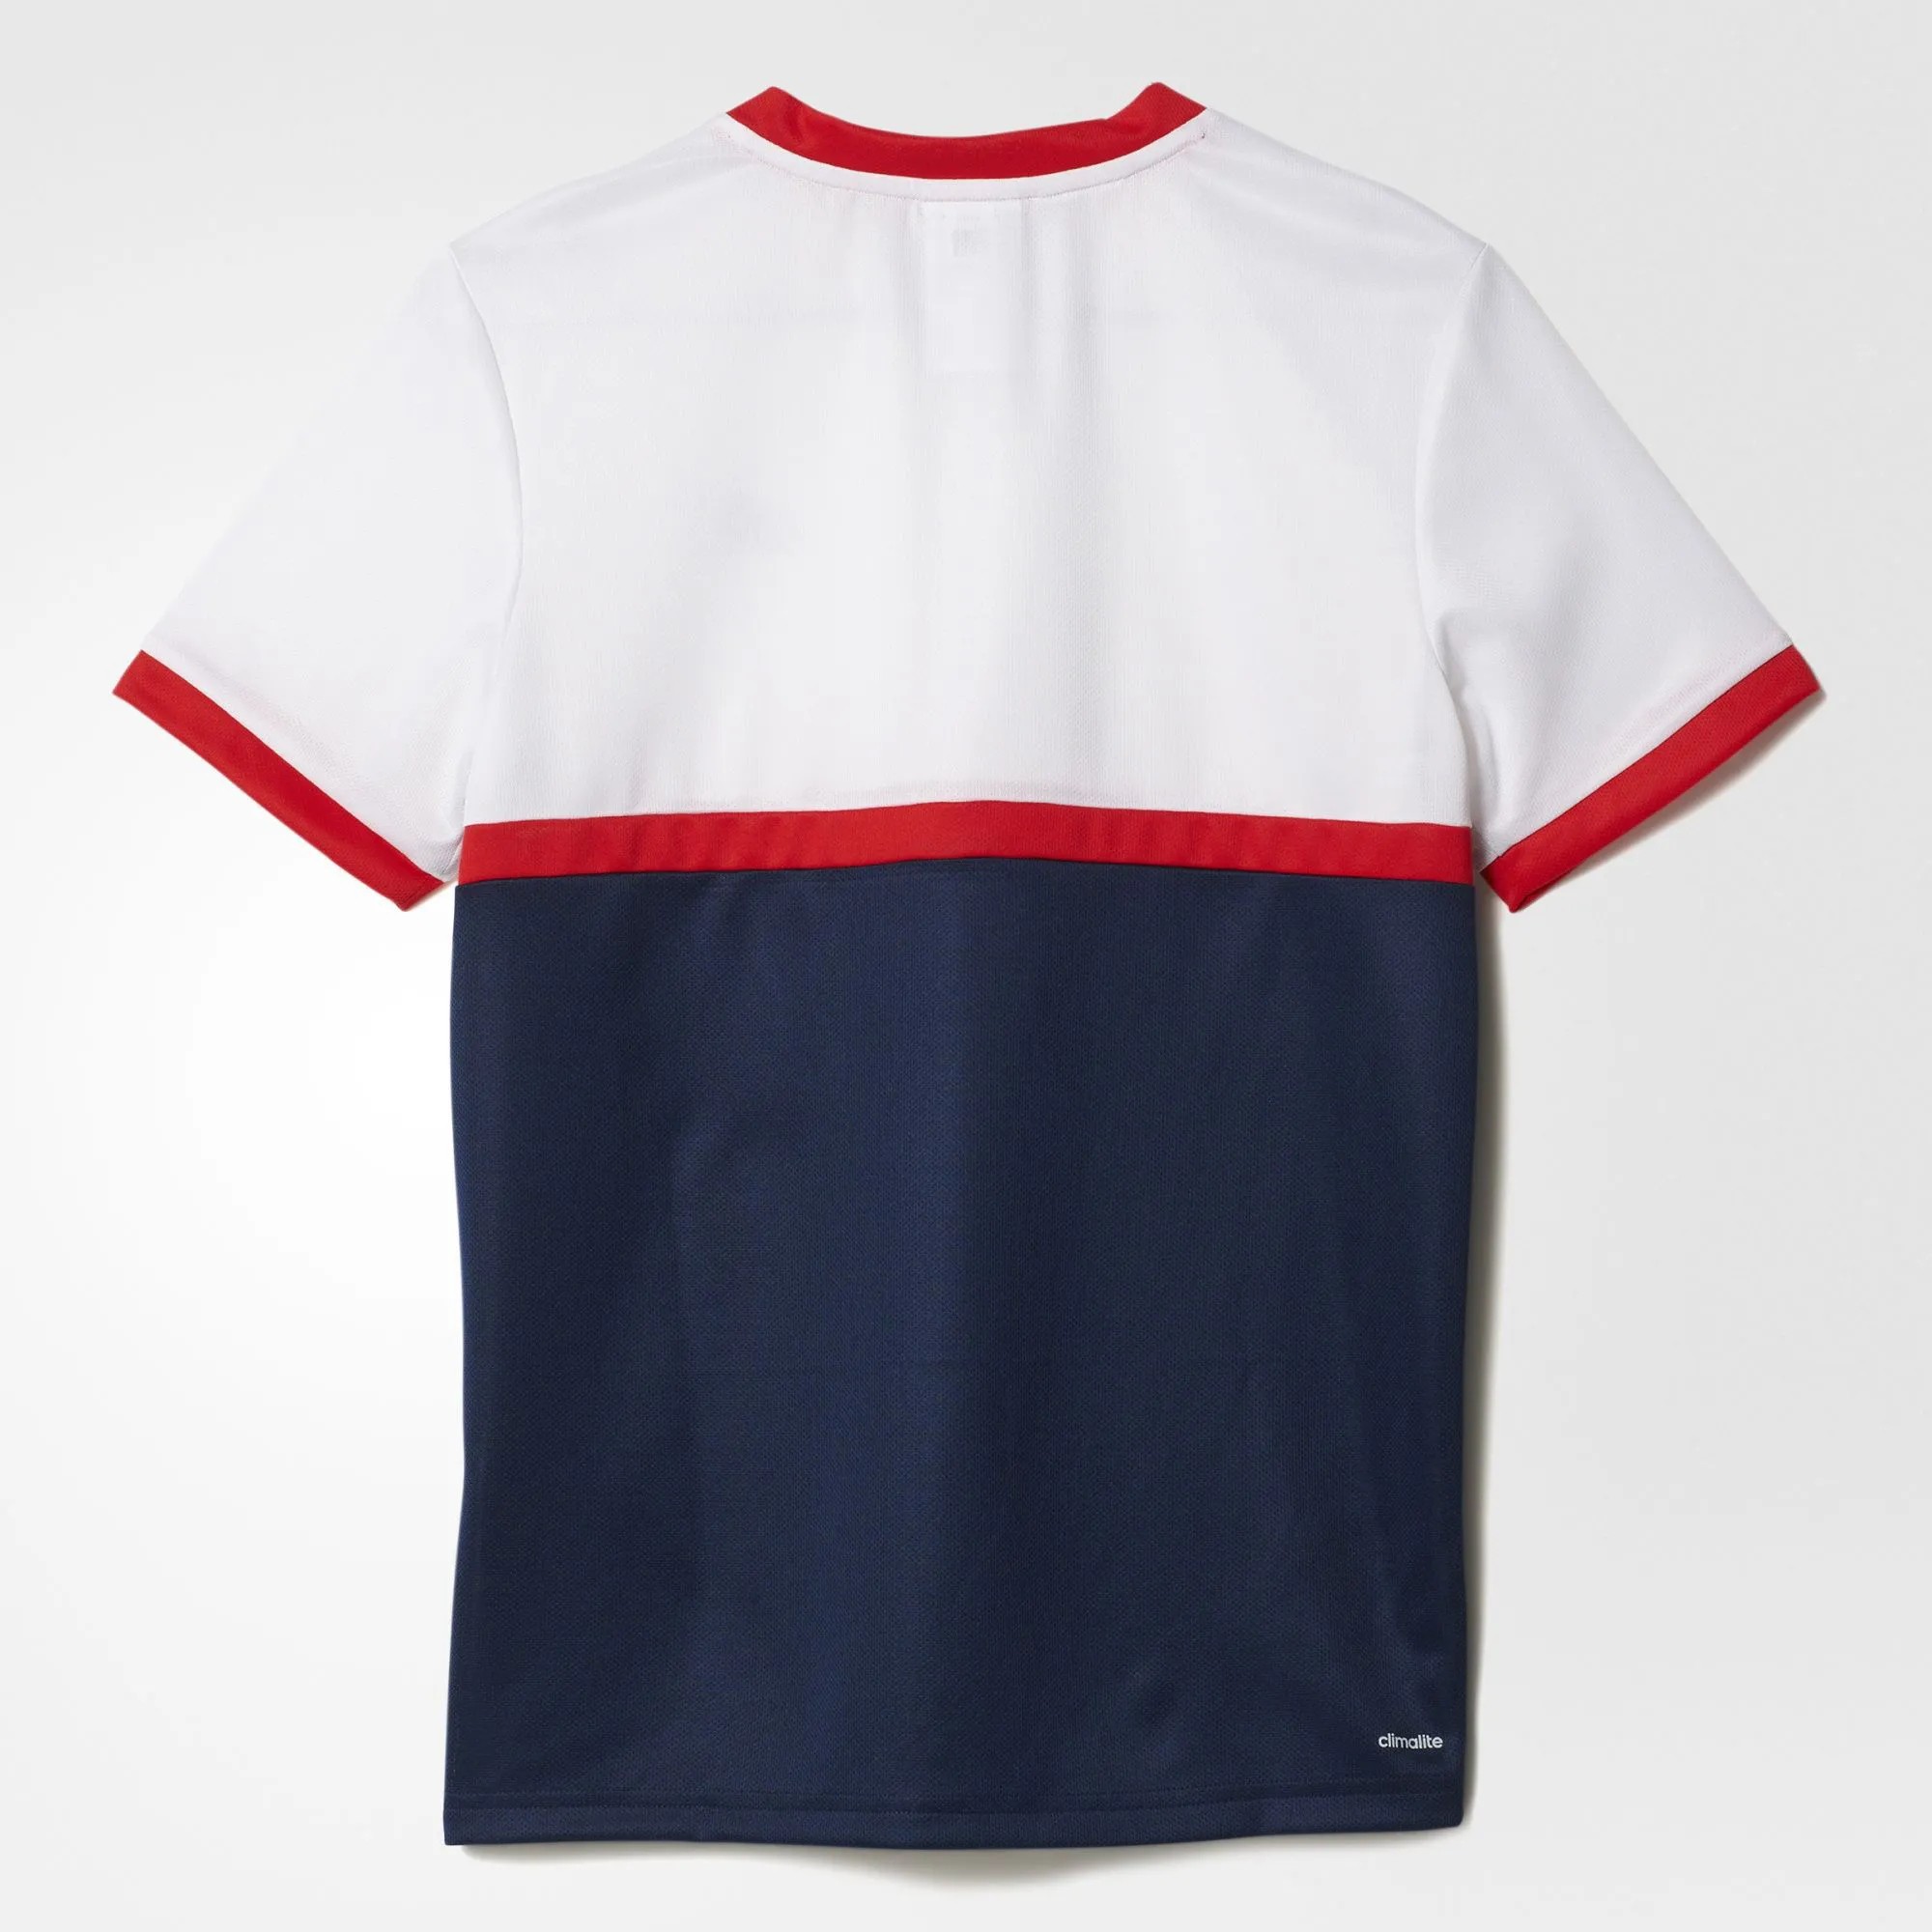 Camiseta adidas Infantil Juvenil Climalite Tenista Atleta